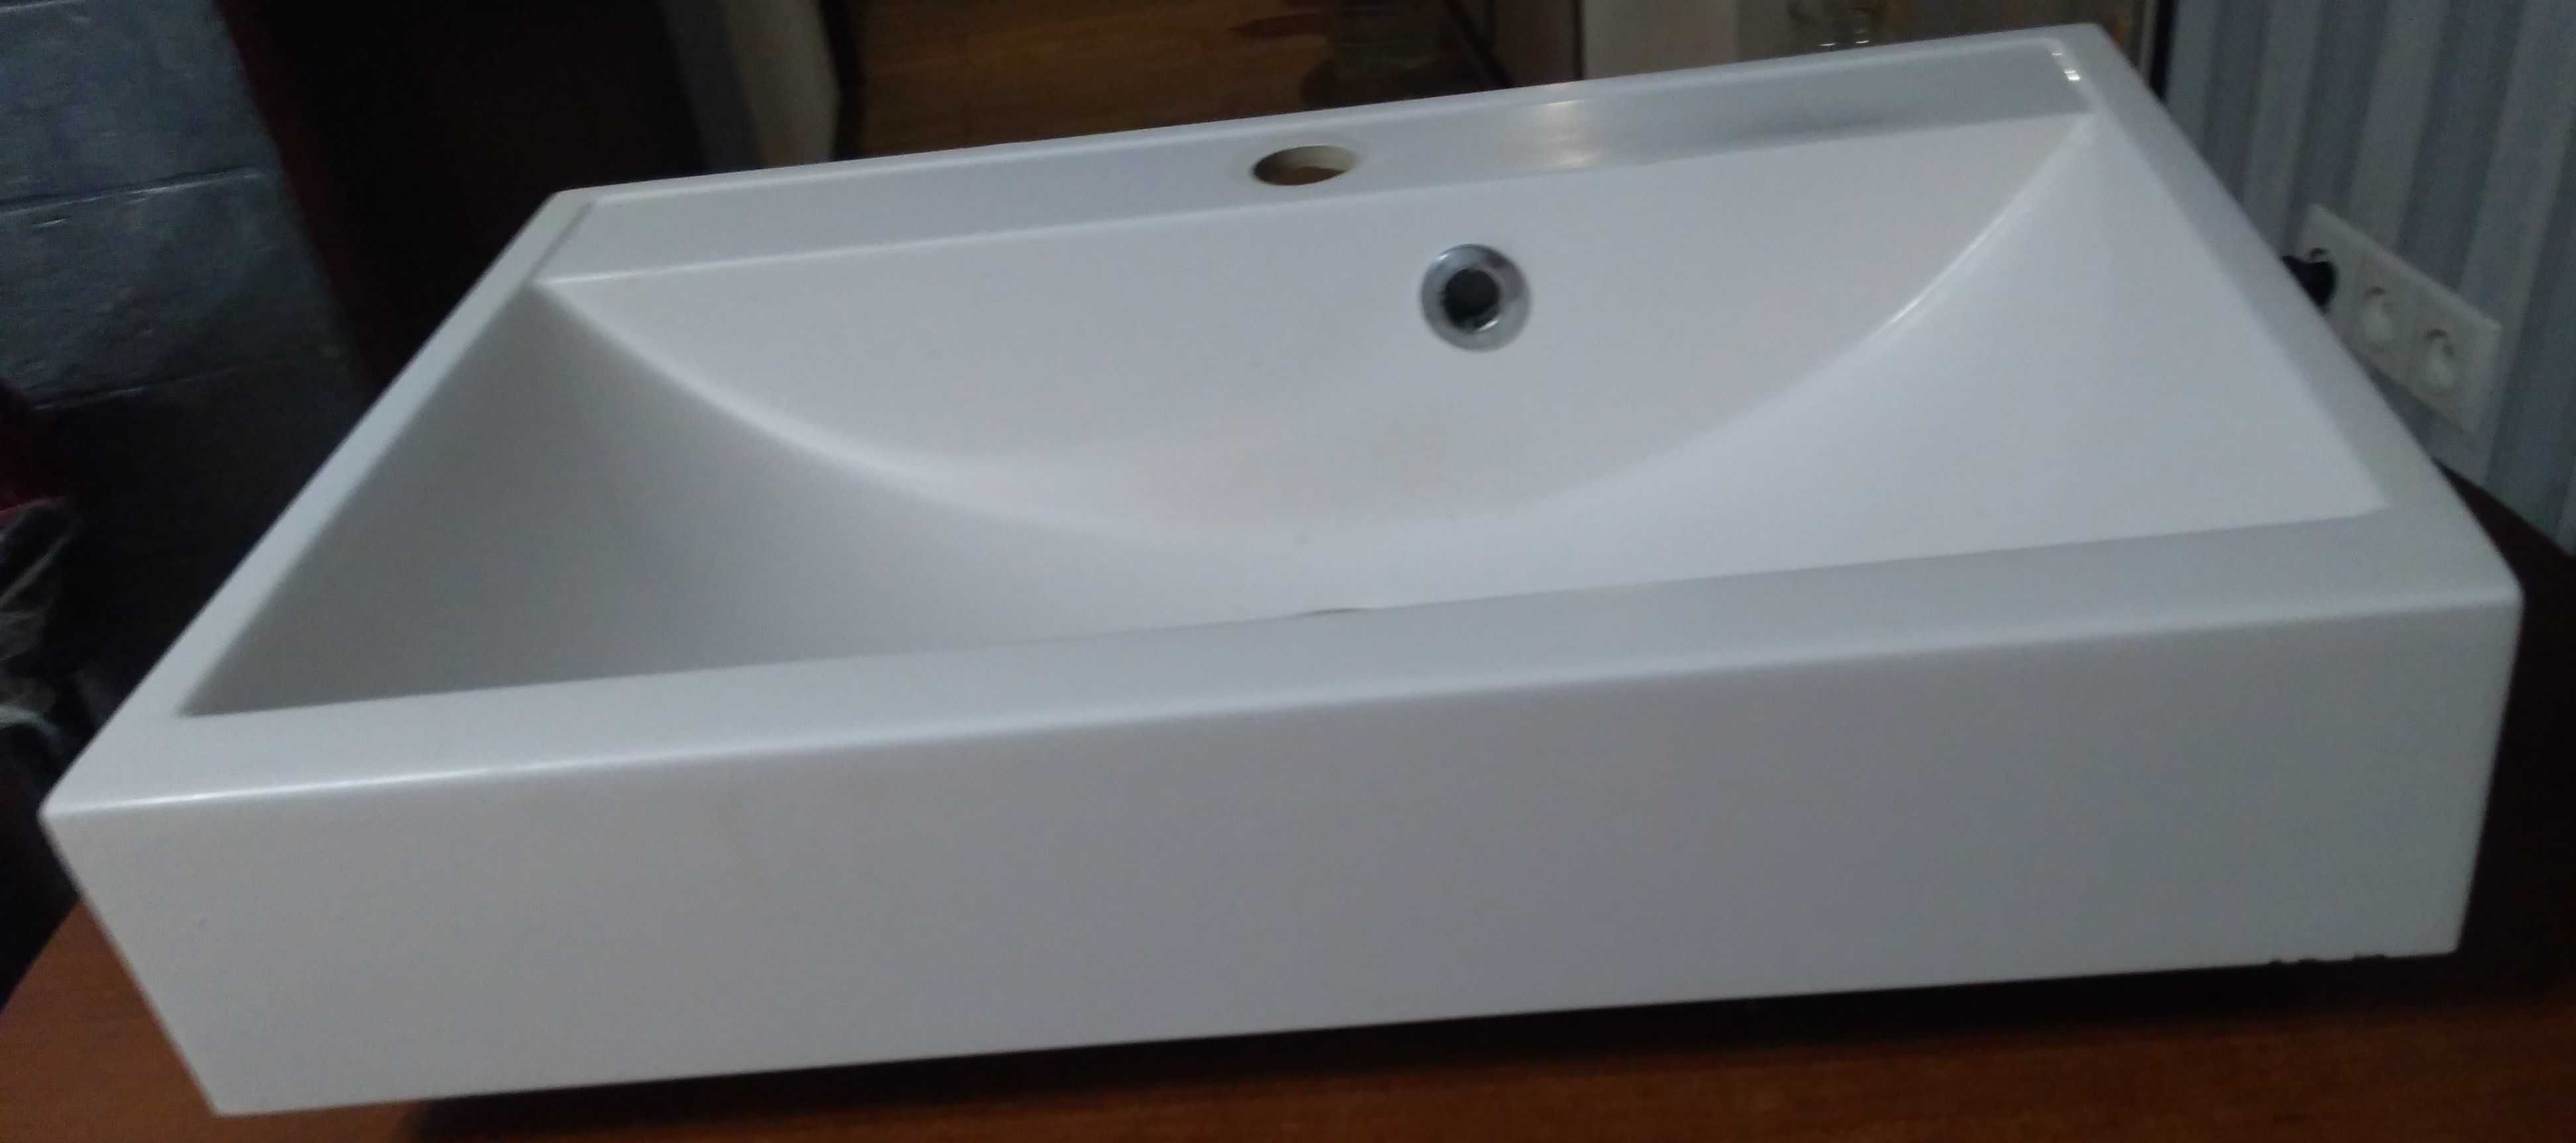 Раковина для ванной комнаты з литого мрамора Marmorin Польша.